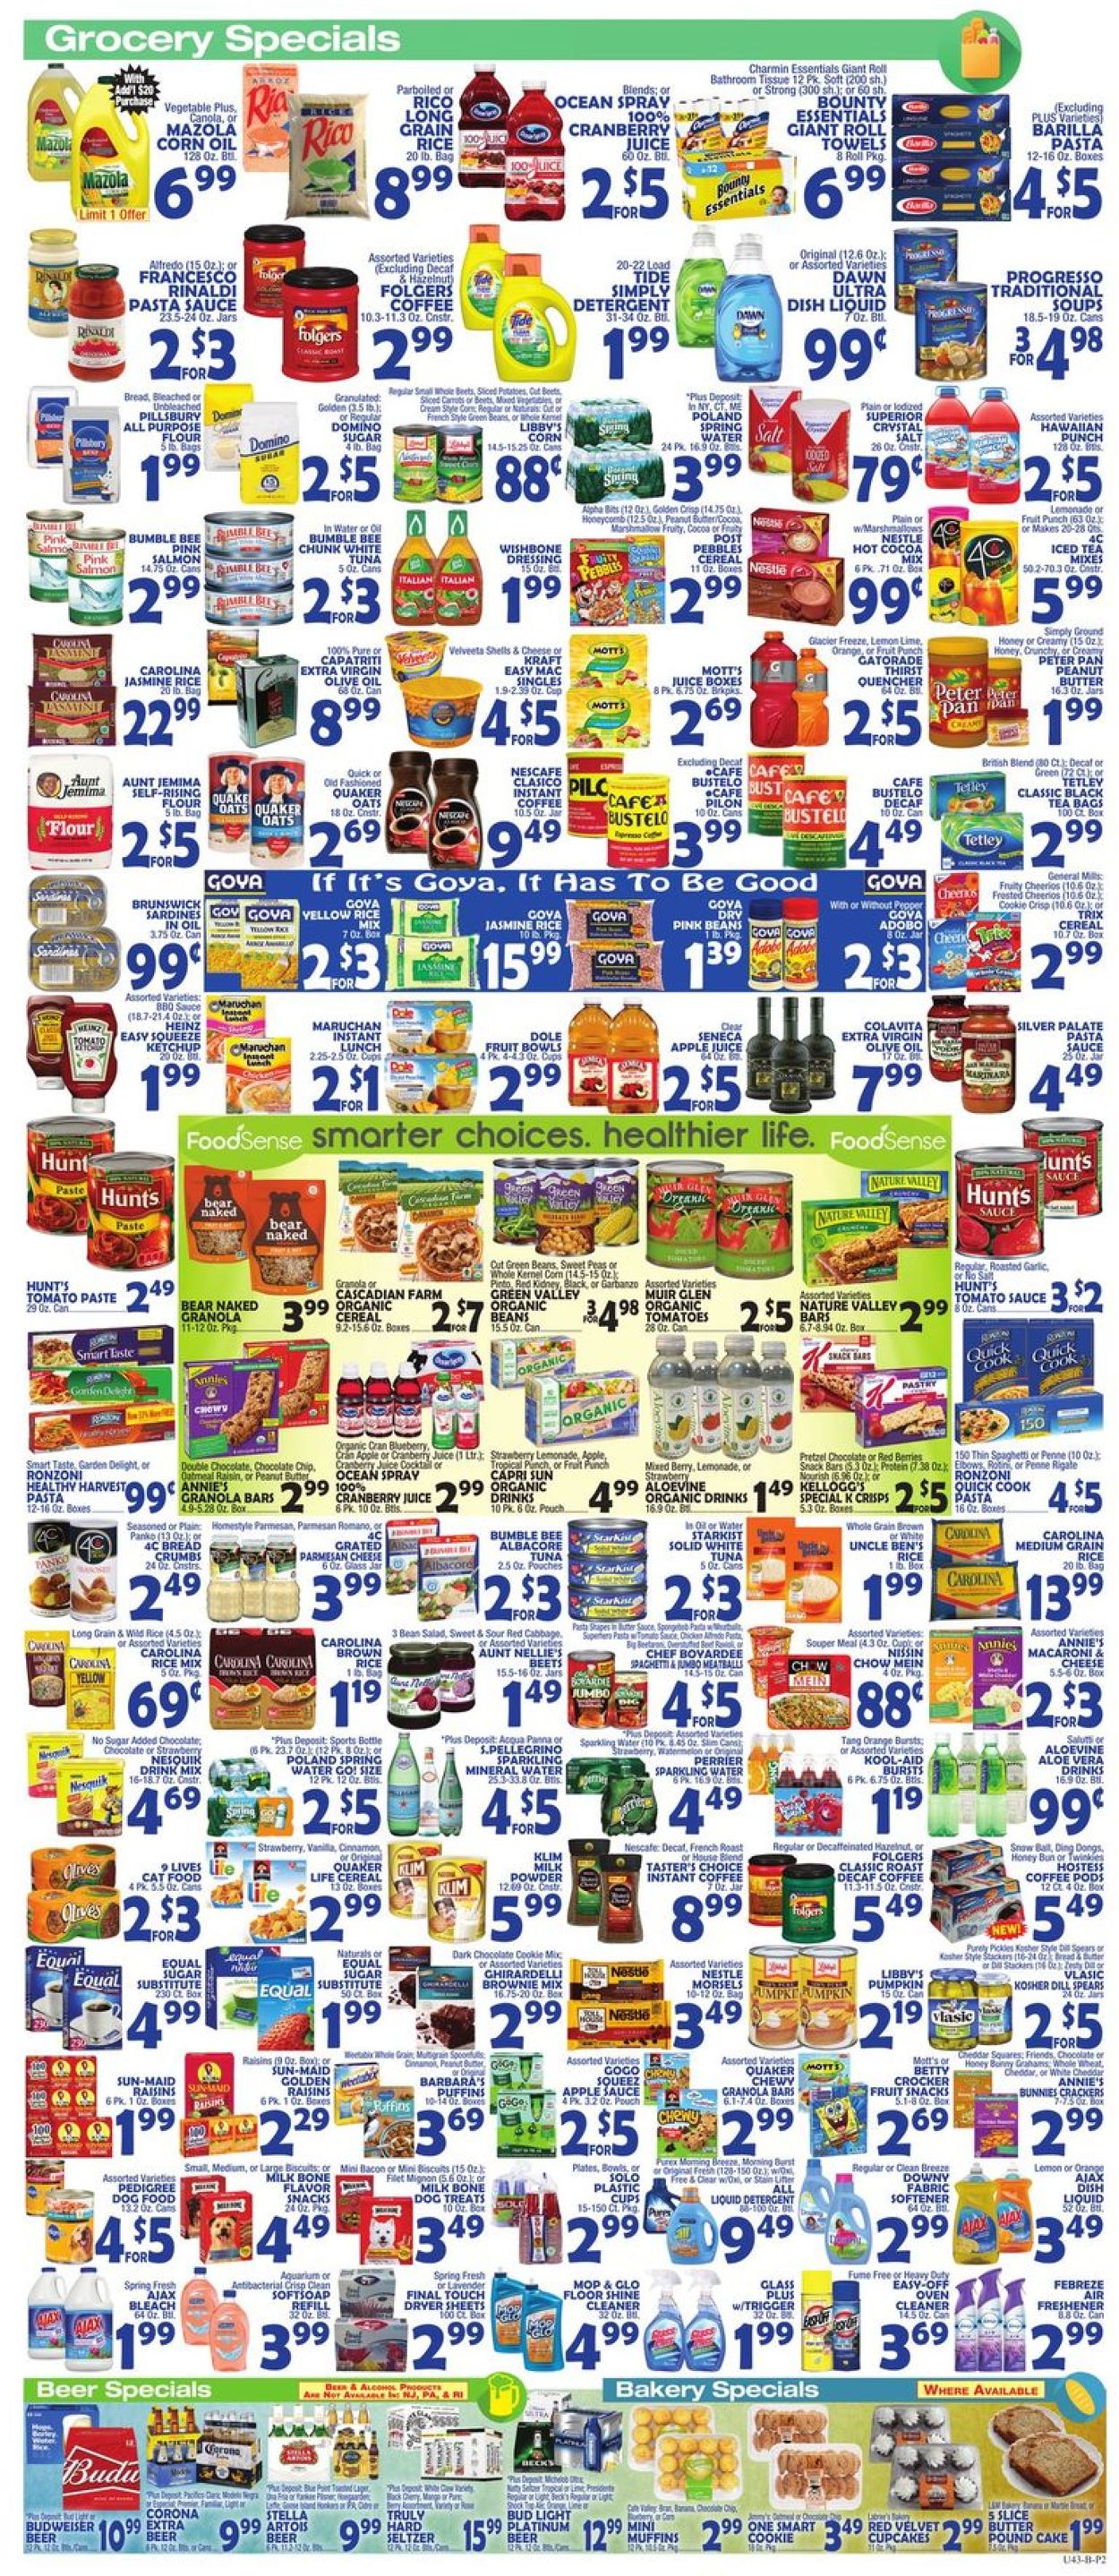 Catalogue Bravo Supermarkets from 01/17/2020